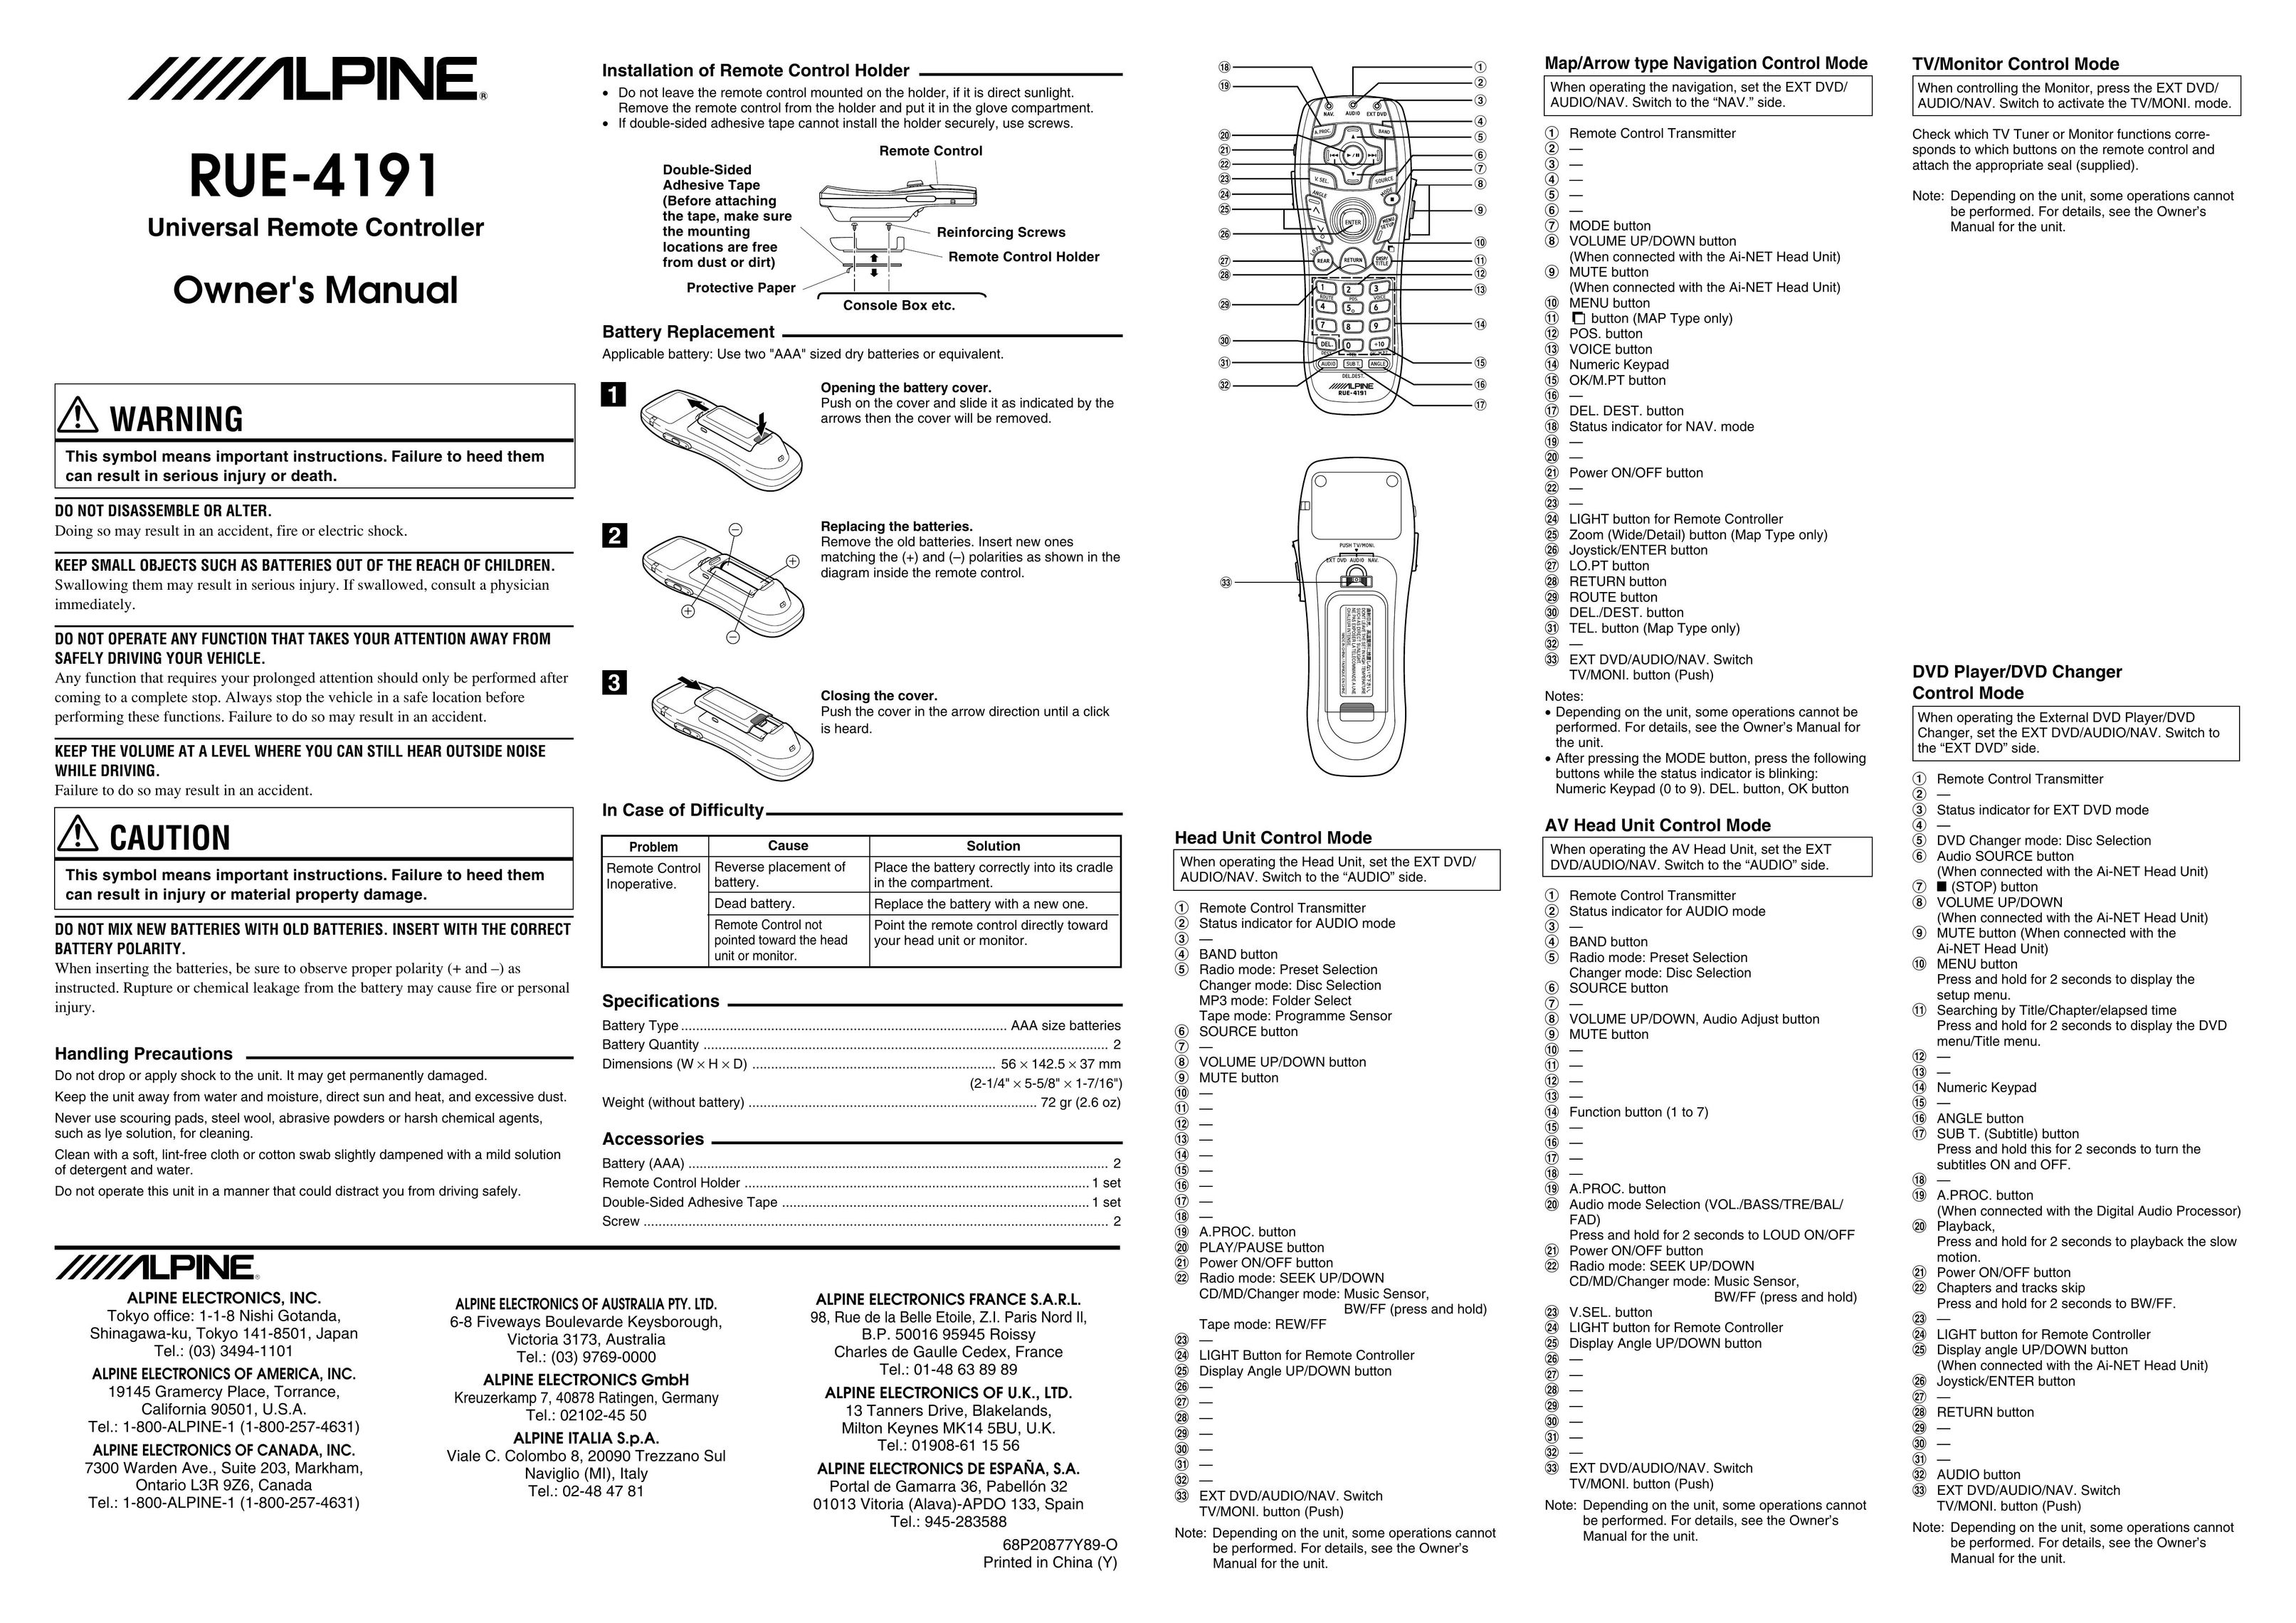 Alpine RUE-4191 Universal Remote User Manual